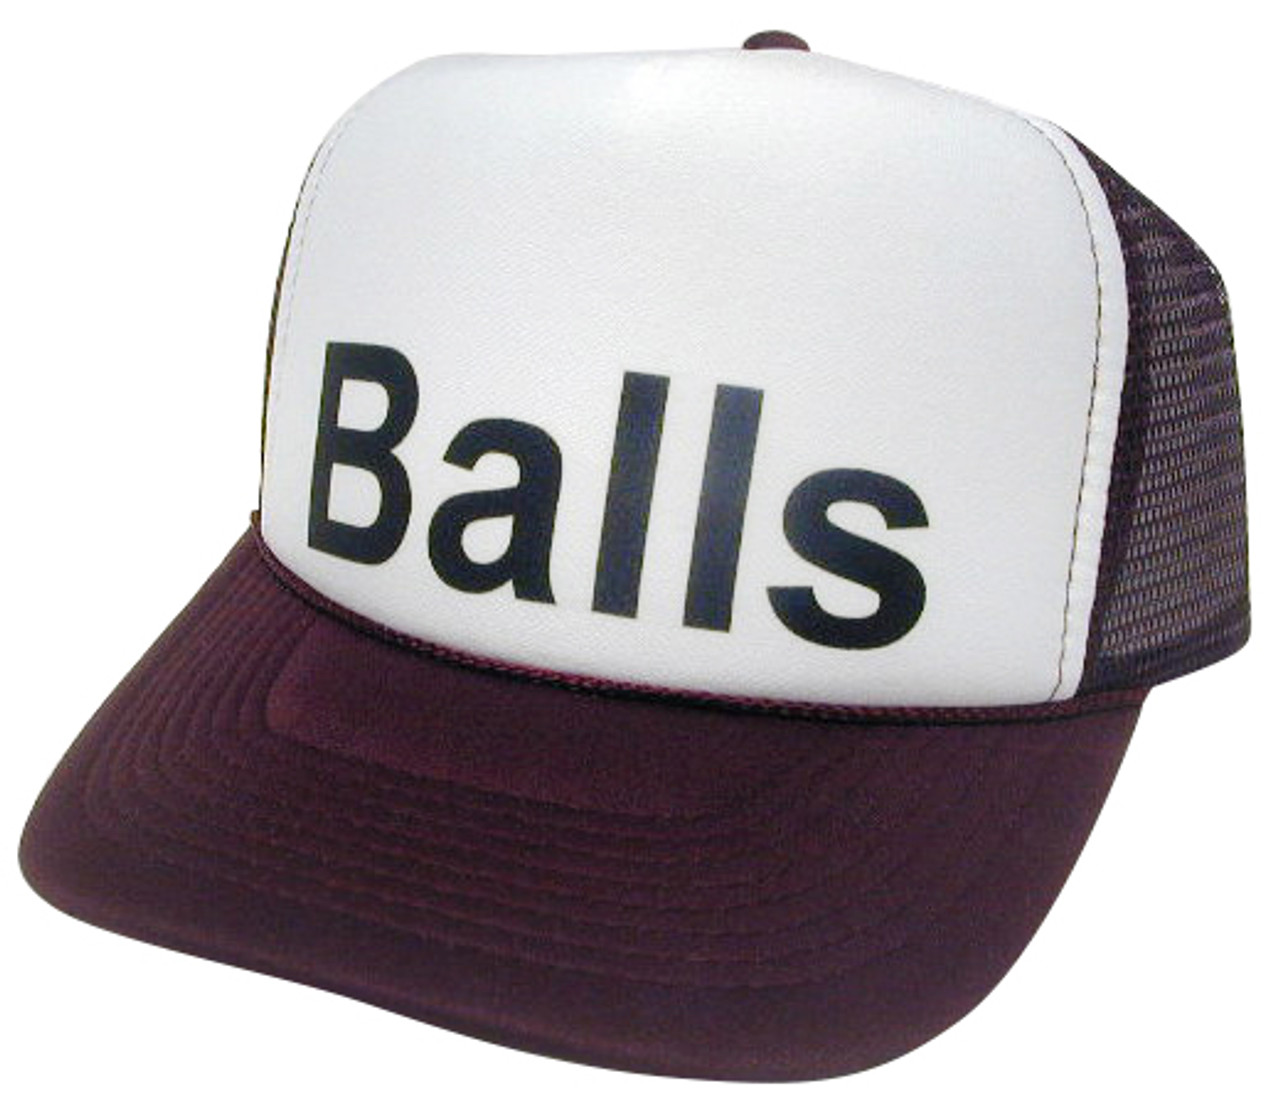 BALLS, Balls Hat, Trucker Hats, Mesh Hat, Snap Back Hat